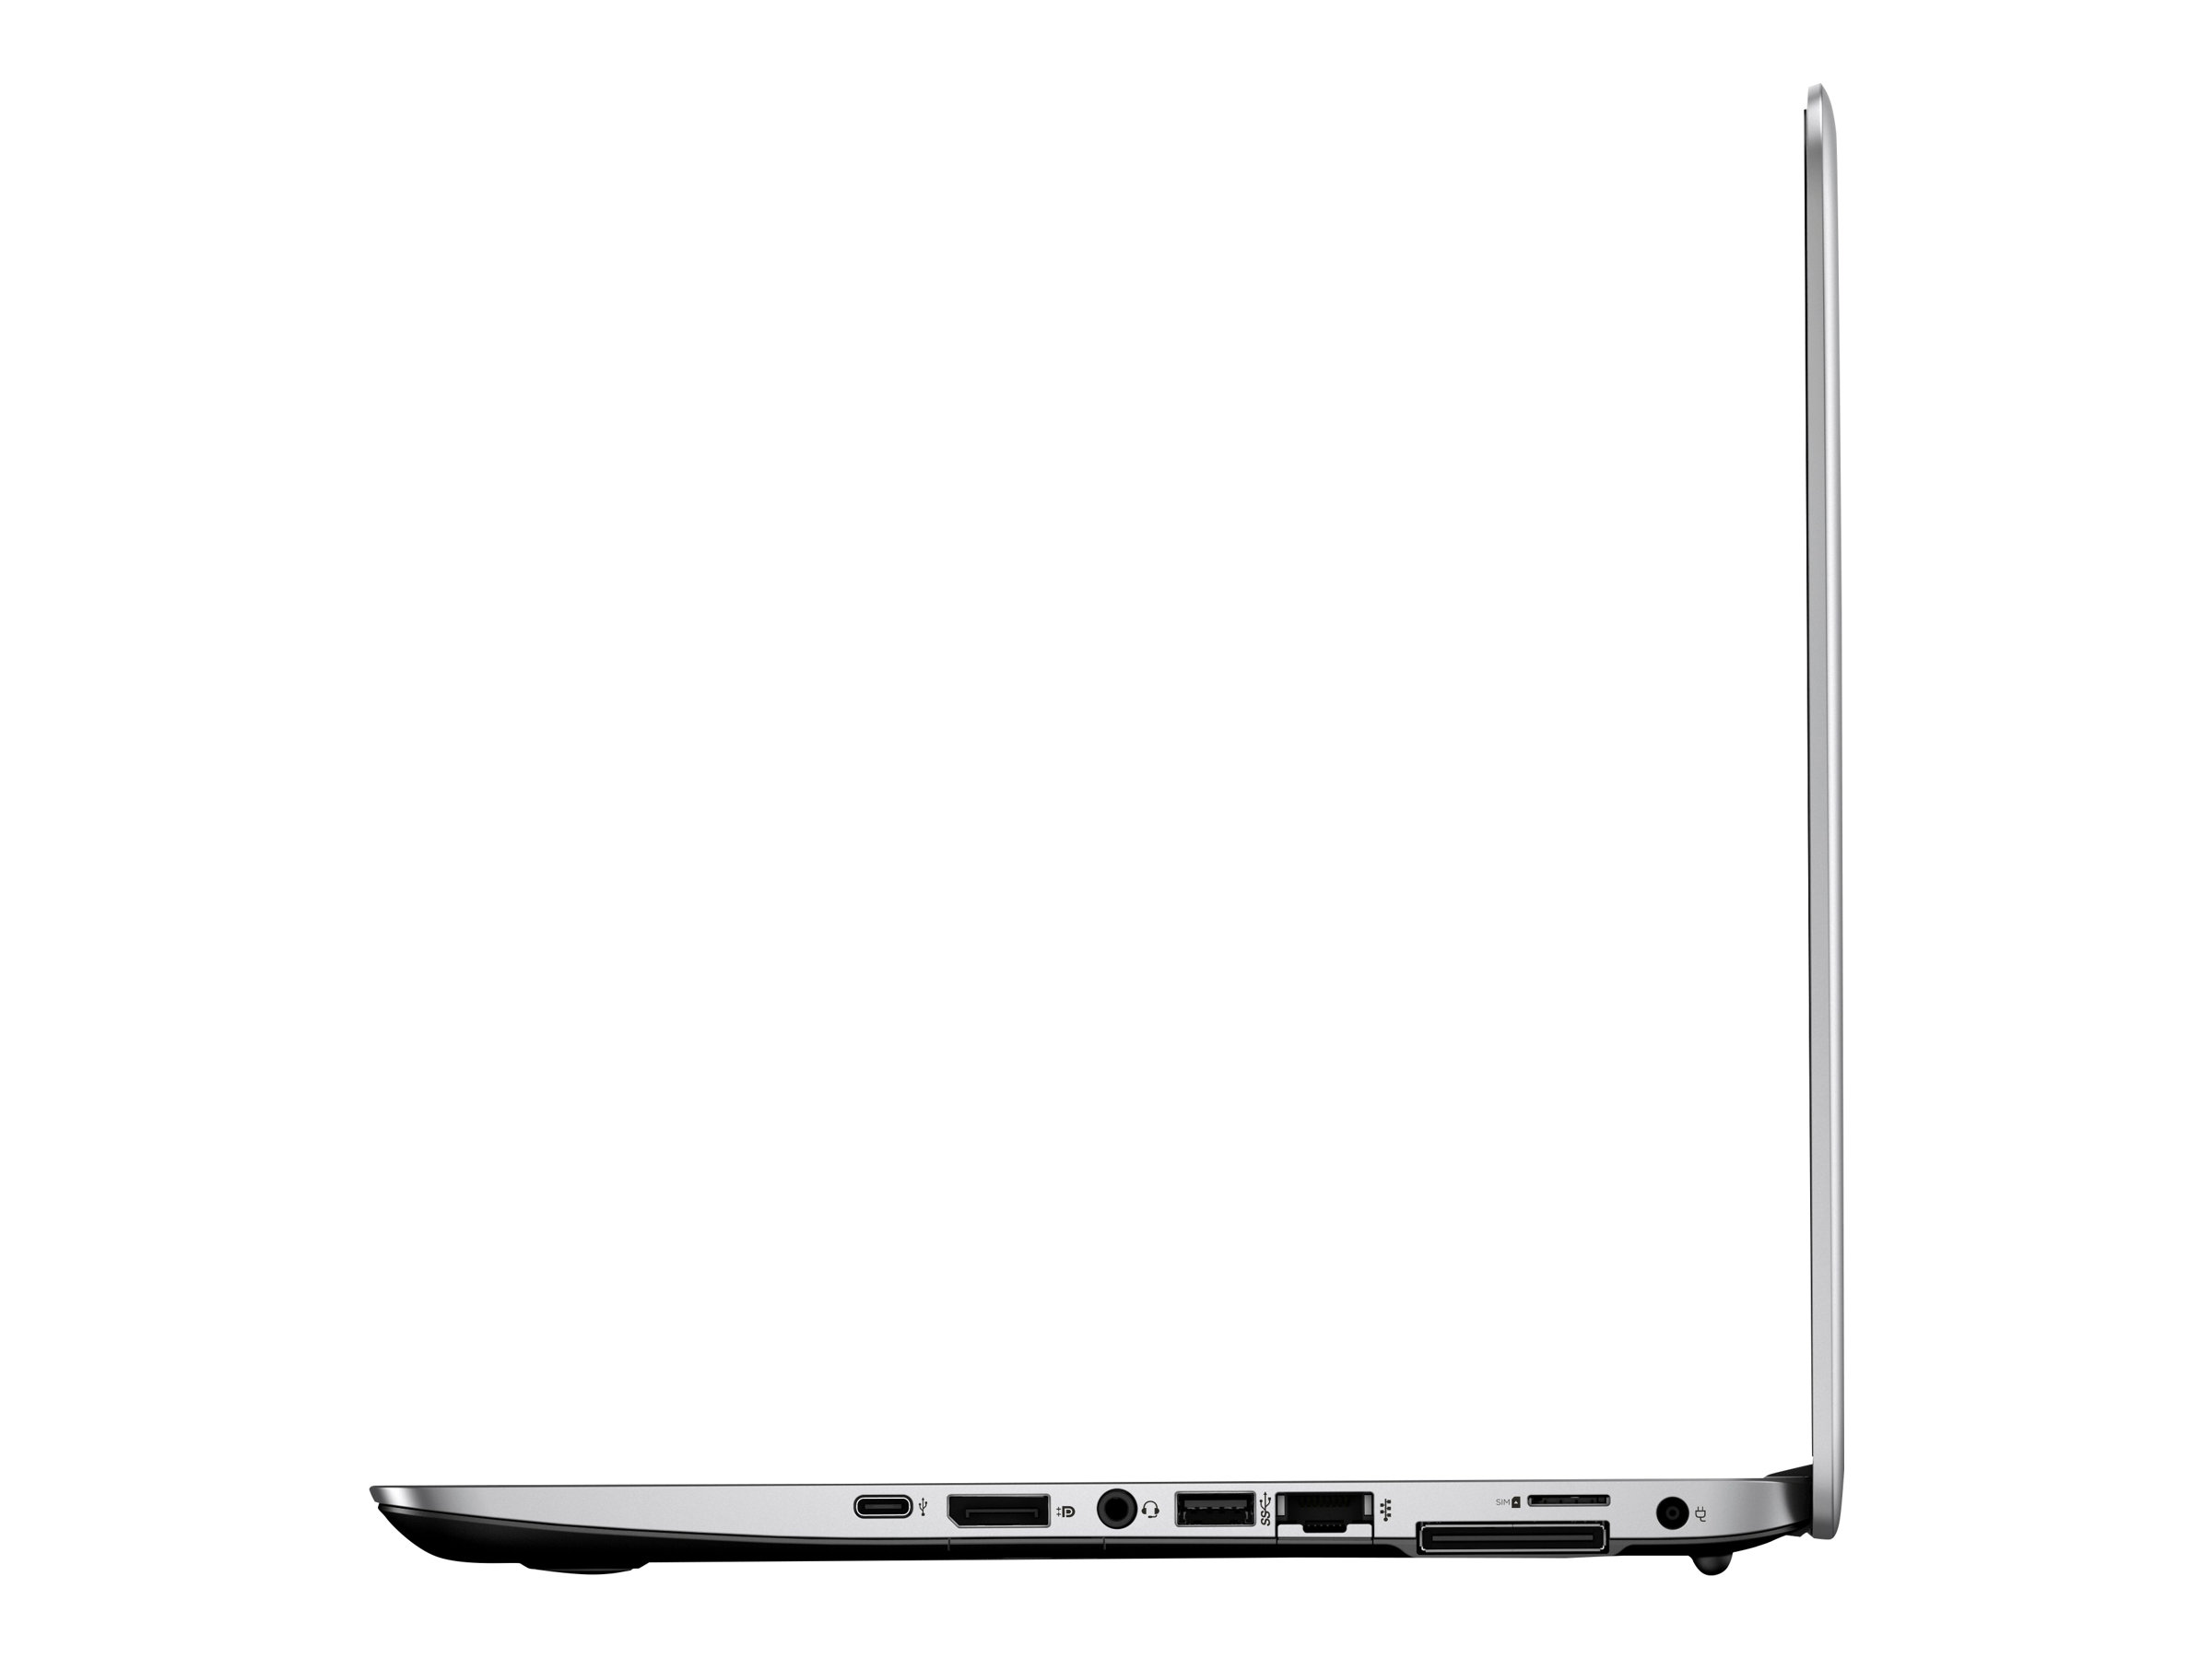 HP EliteBook 840 G3 Notebook PC Specifications